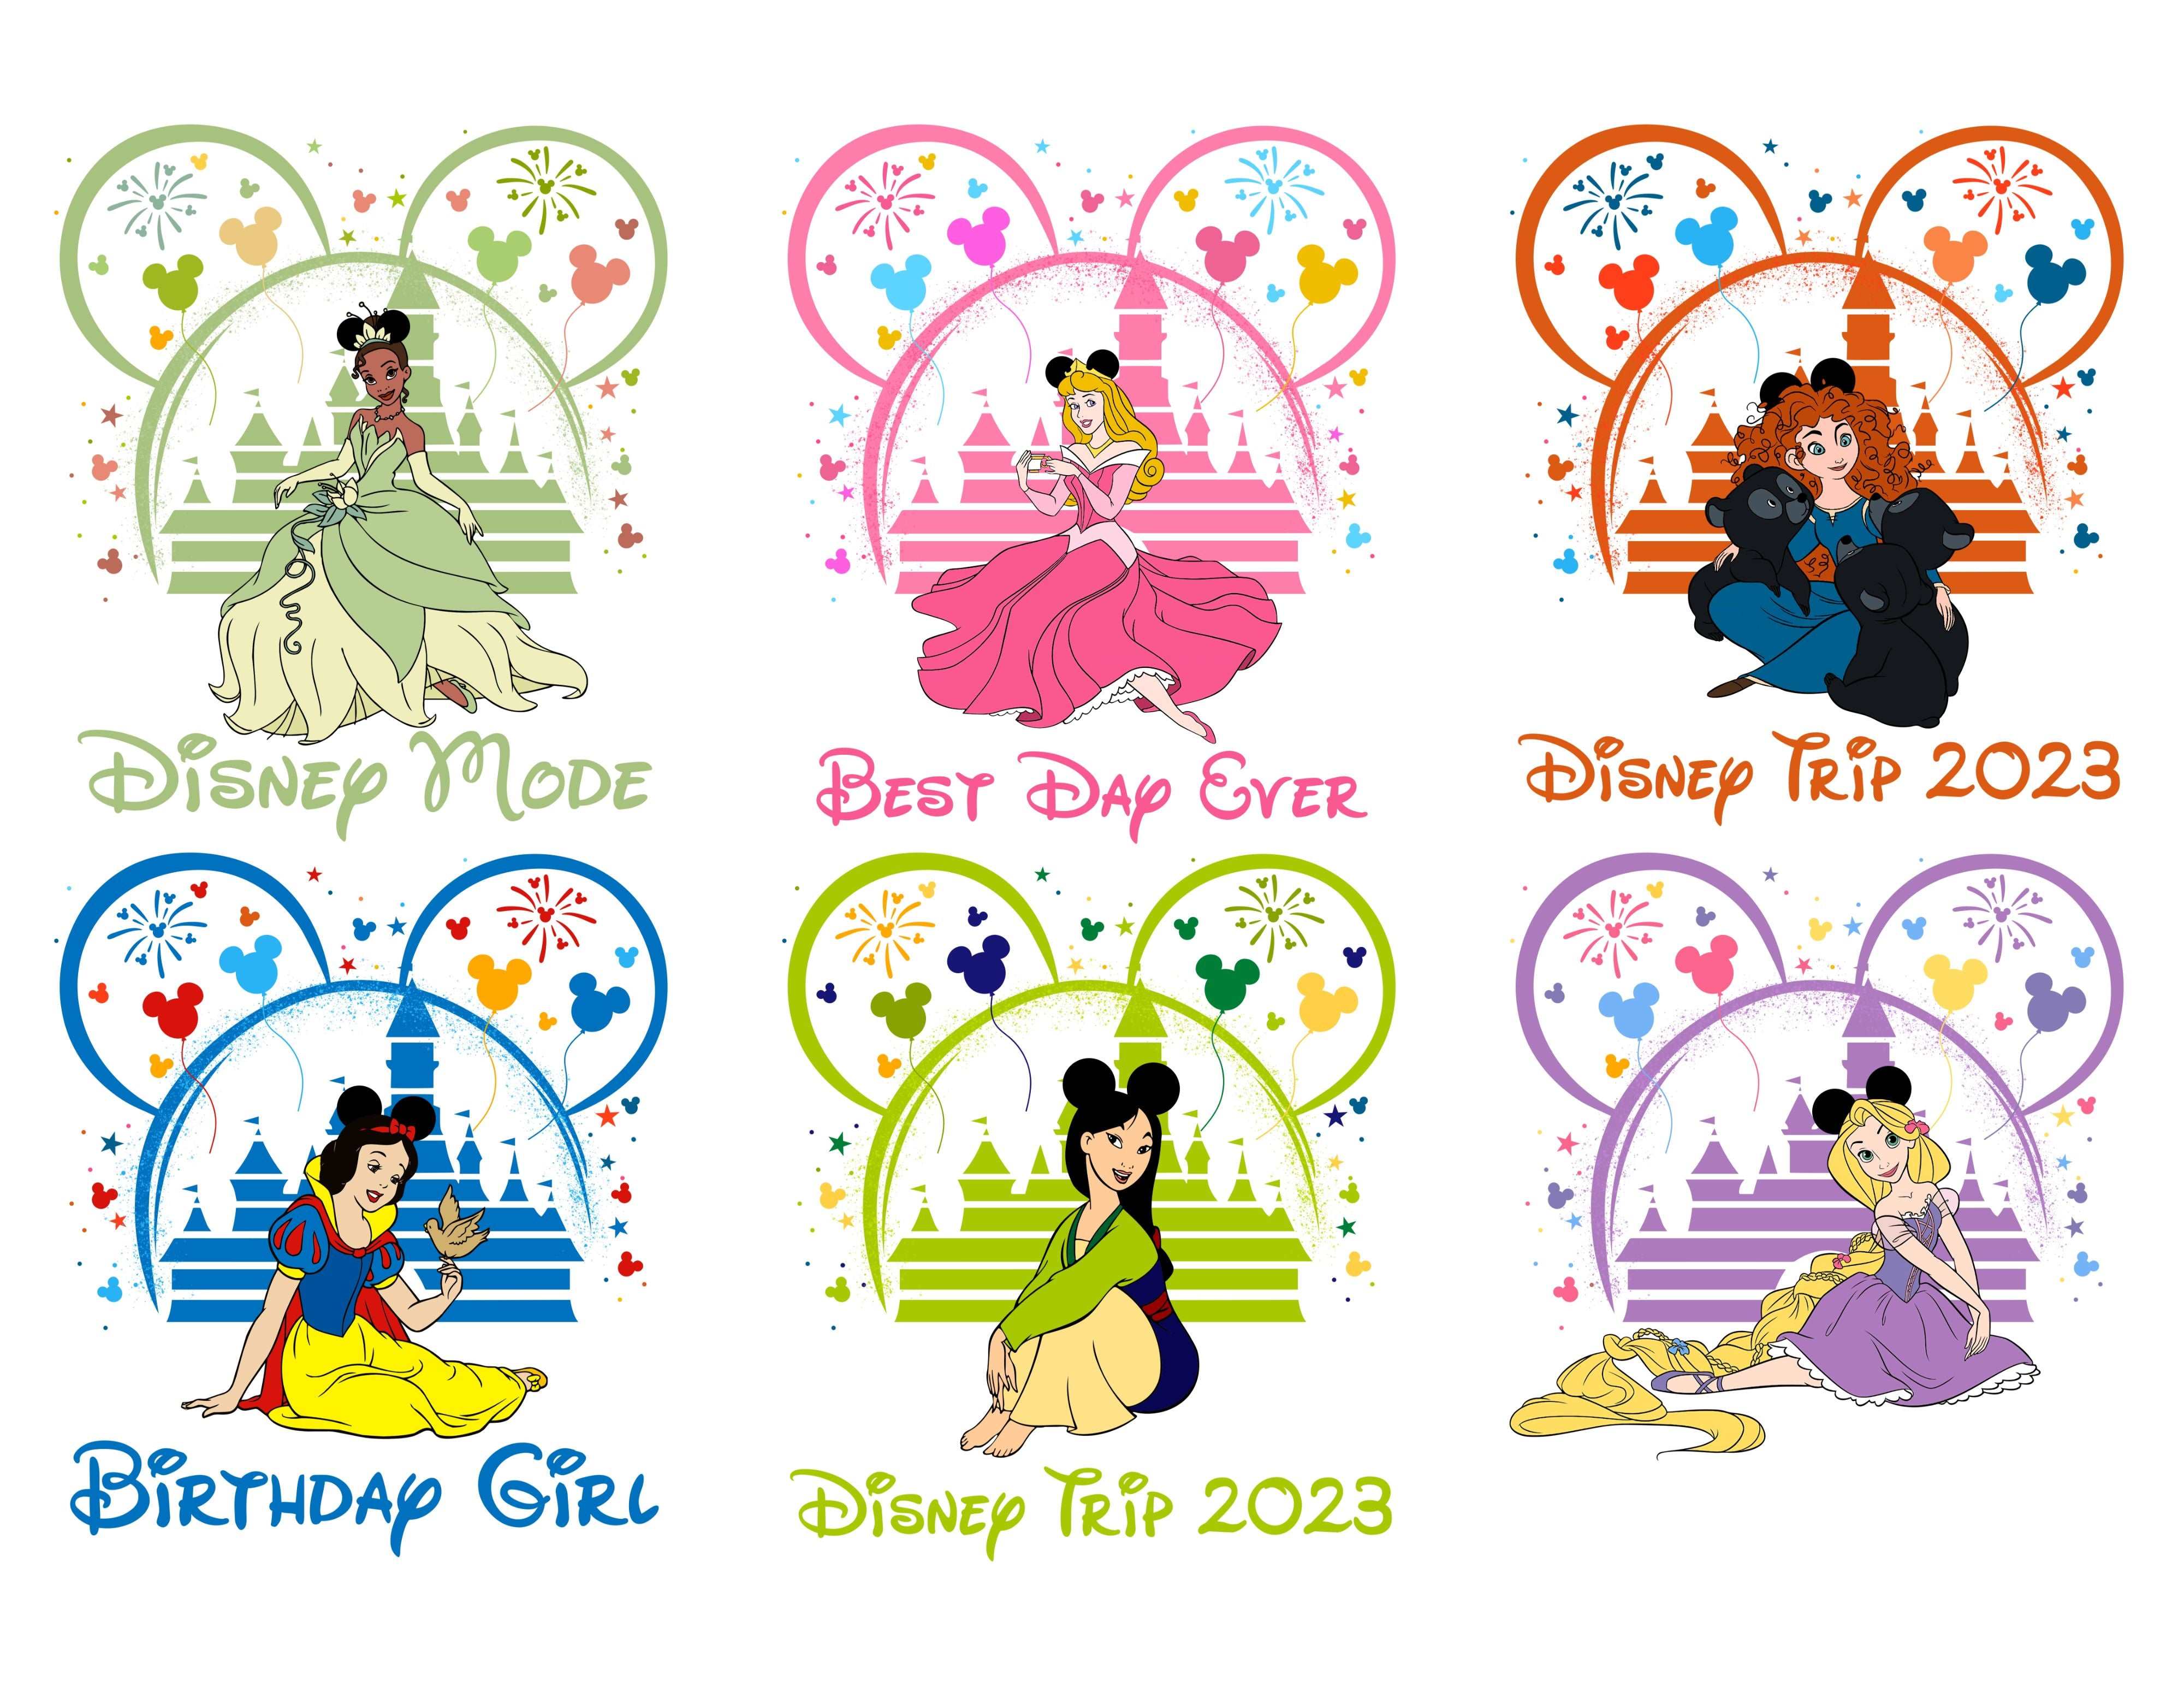 Bundle Disney Princess PNG Disney Mode, Best Day Ever, Disney Trip